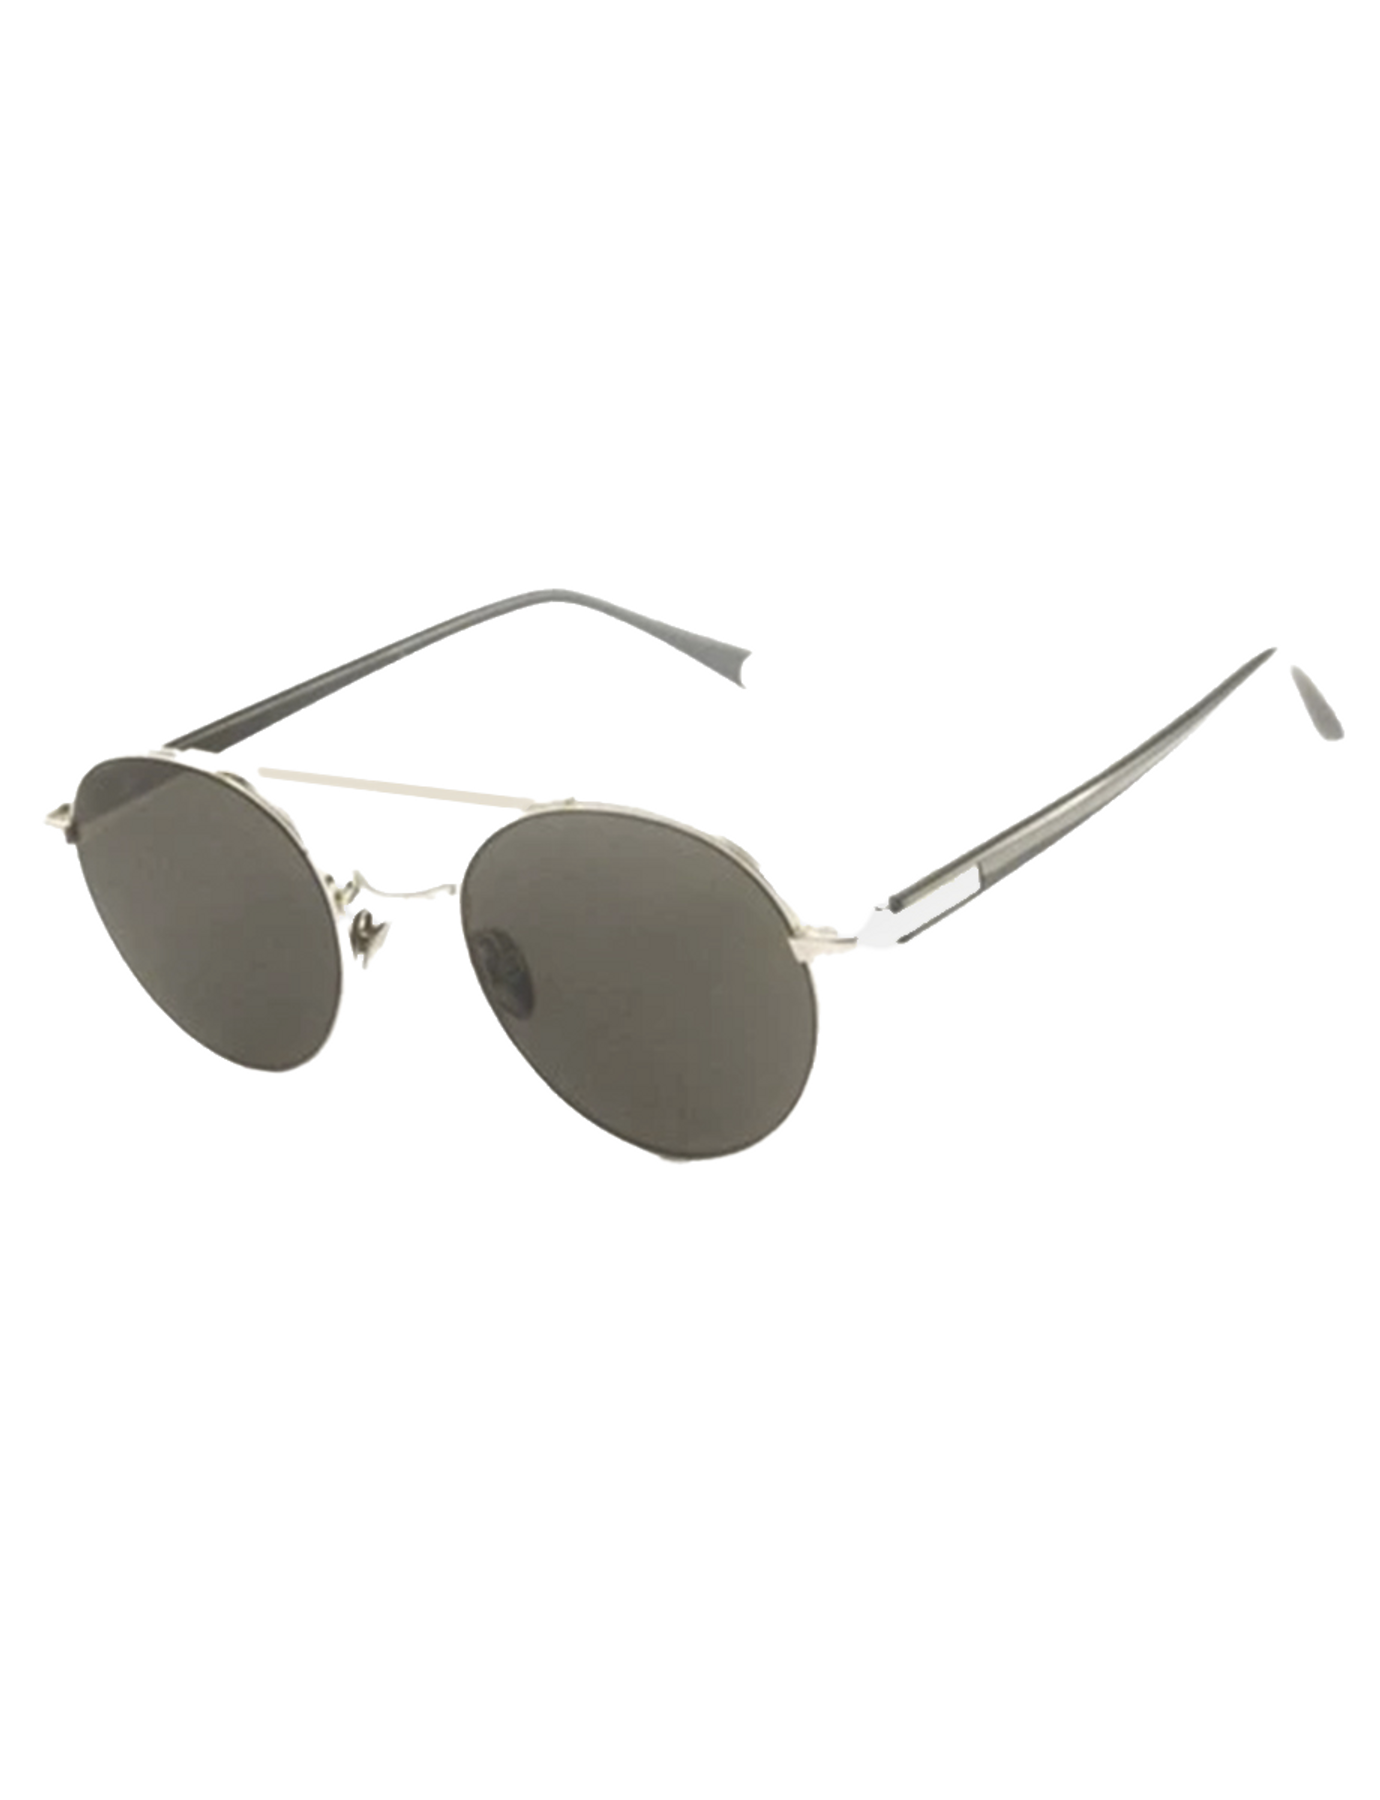 sunglasses-elena-metal